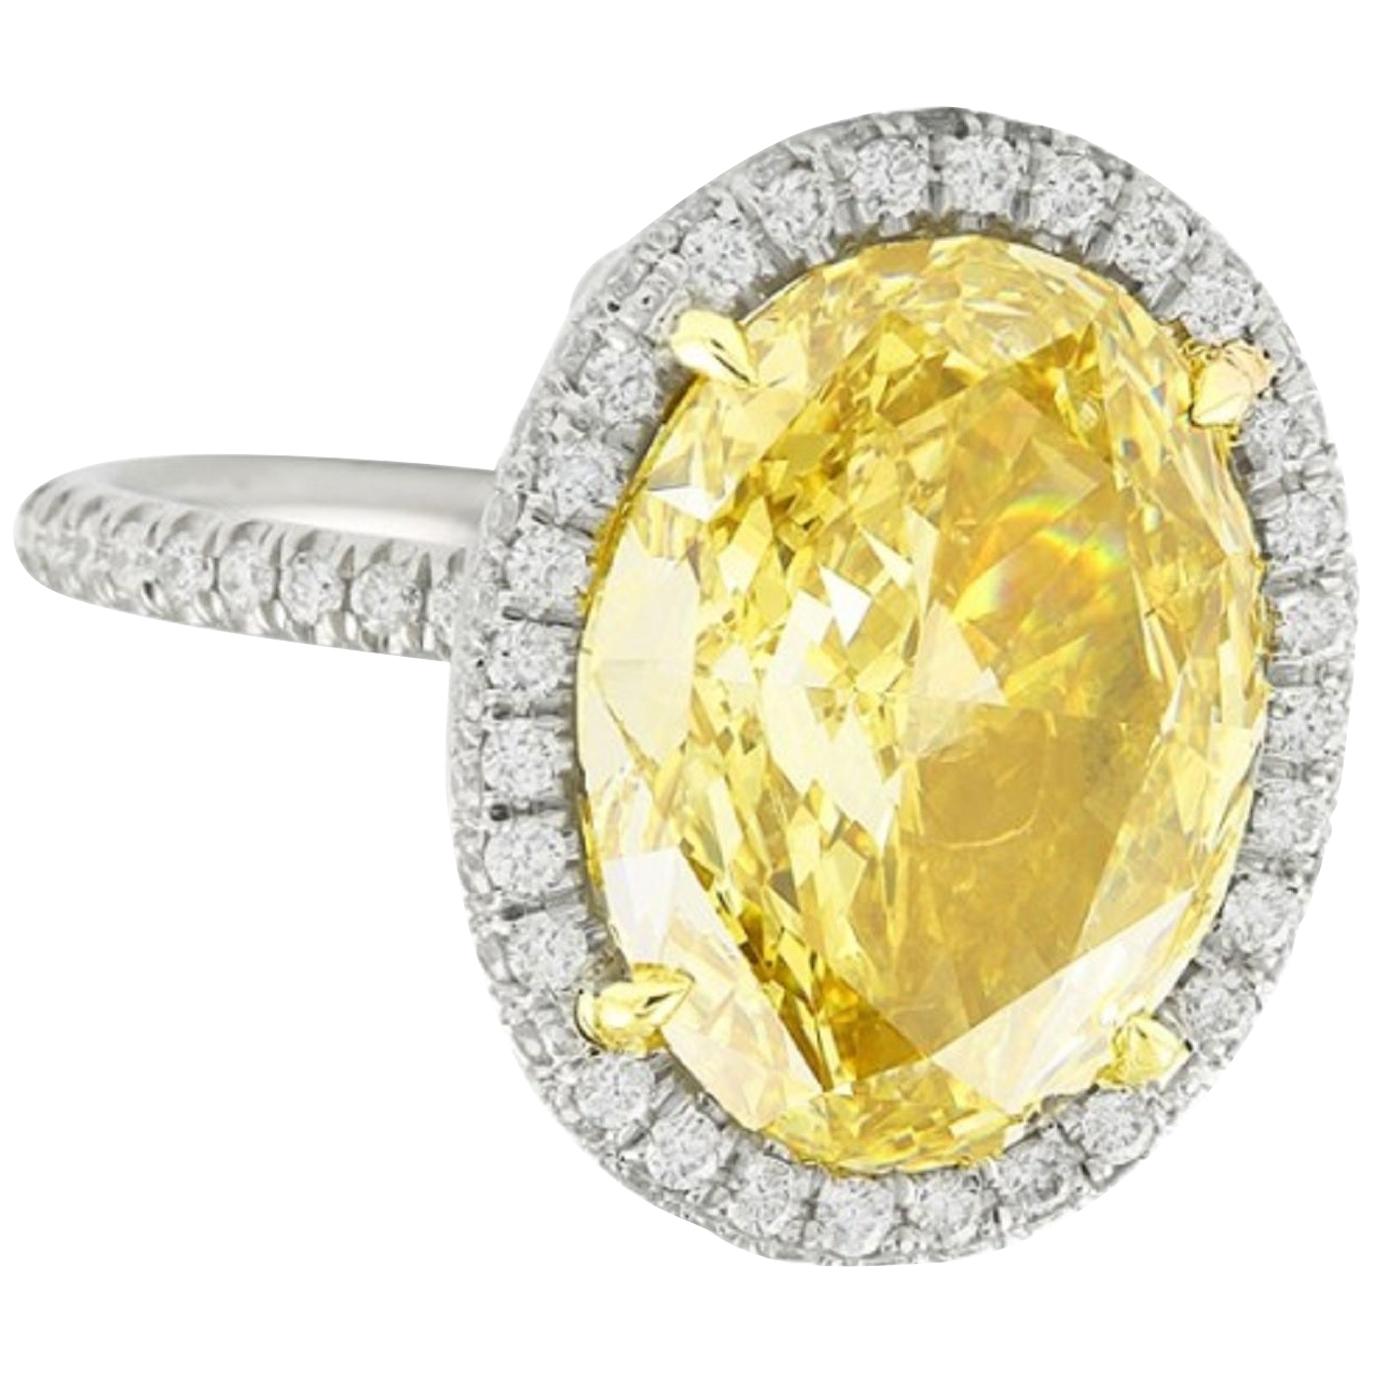 GIA Certified 2.22 Carat Fancy Yellow Oval Diamond Ring